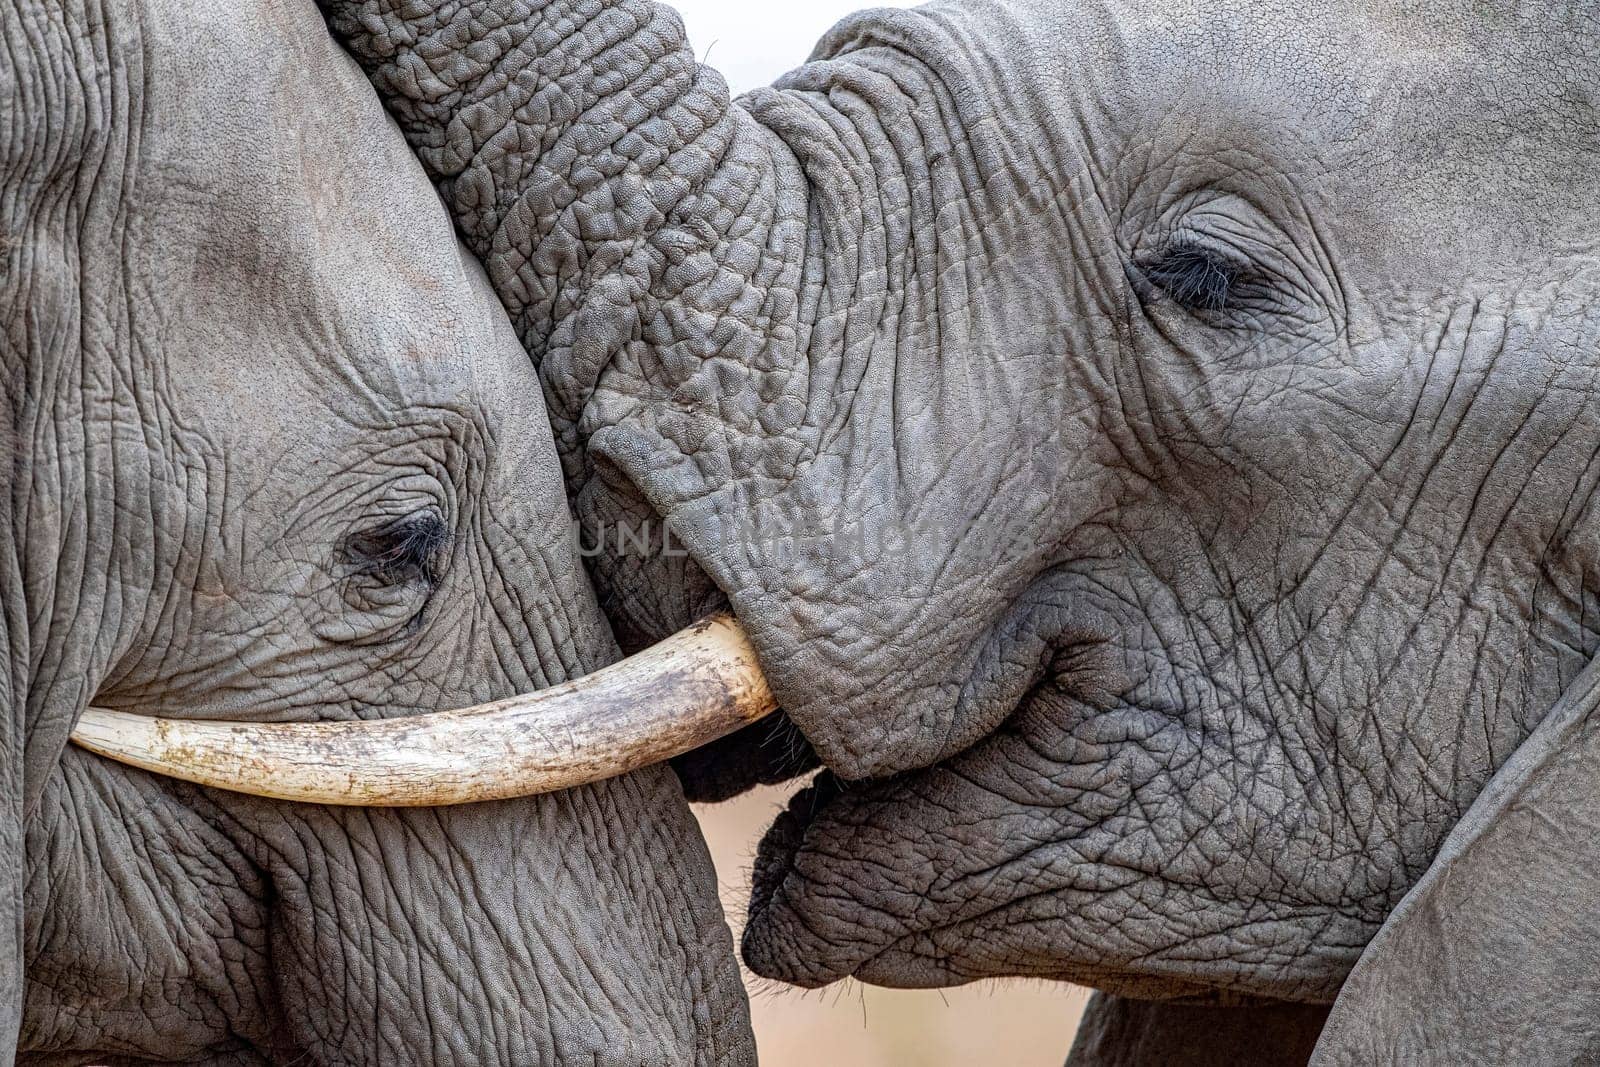 elephant eye close up in kruger park south africa detail